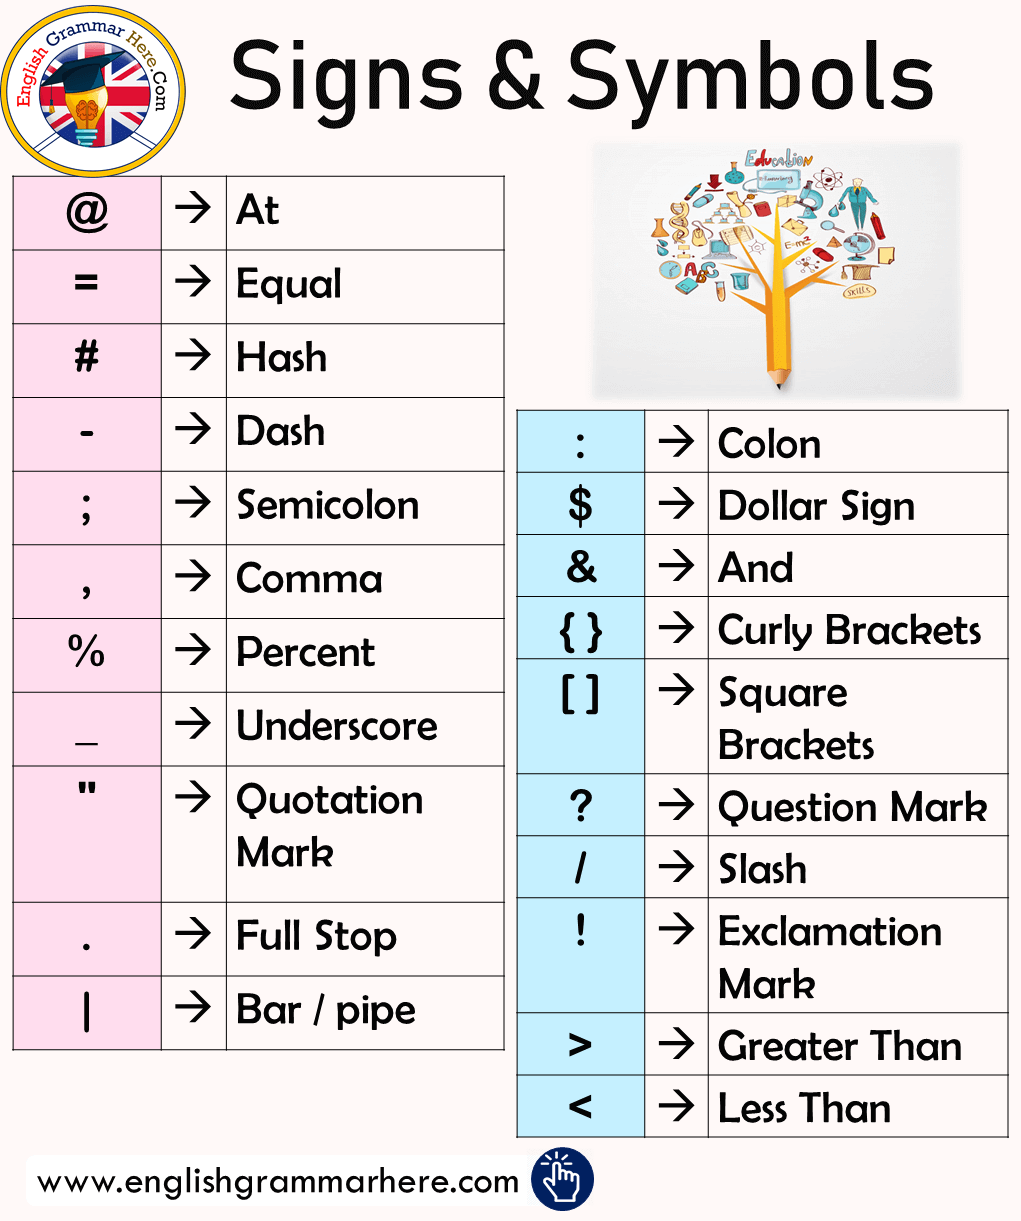 English Signs & Symbols List